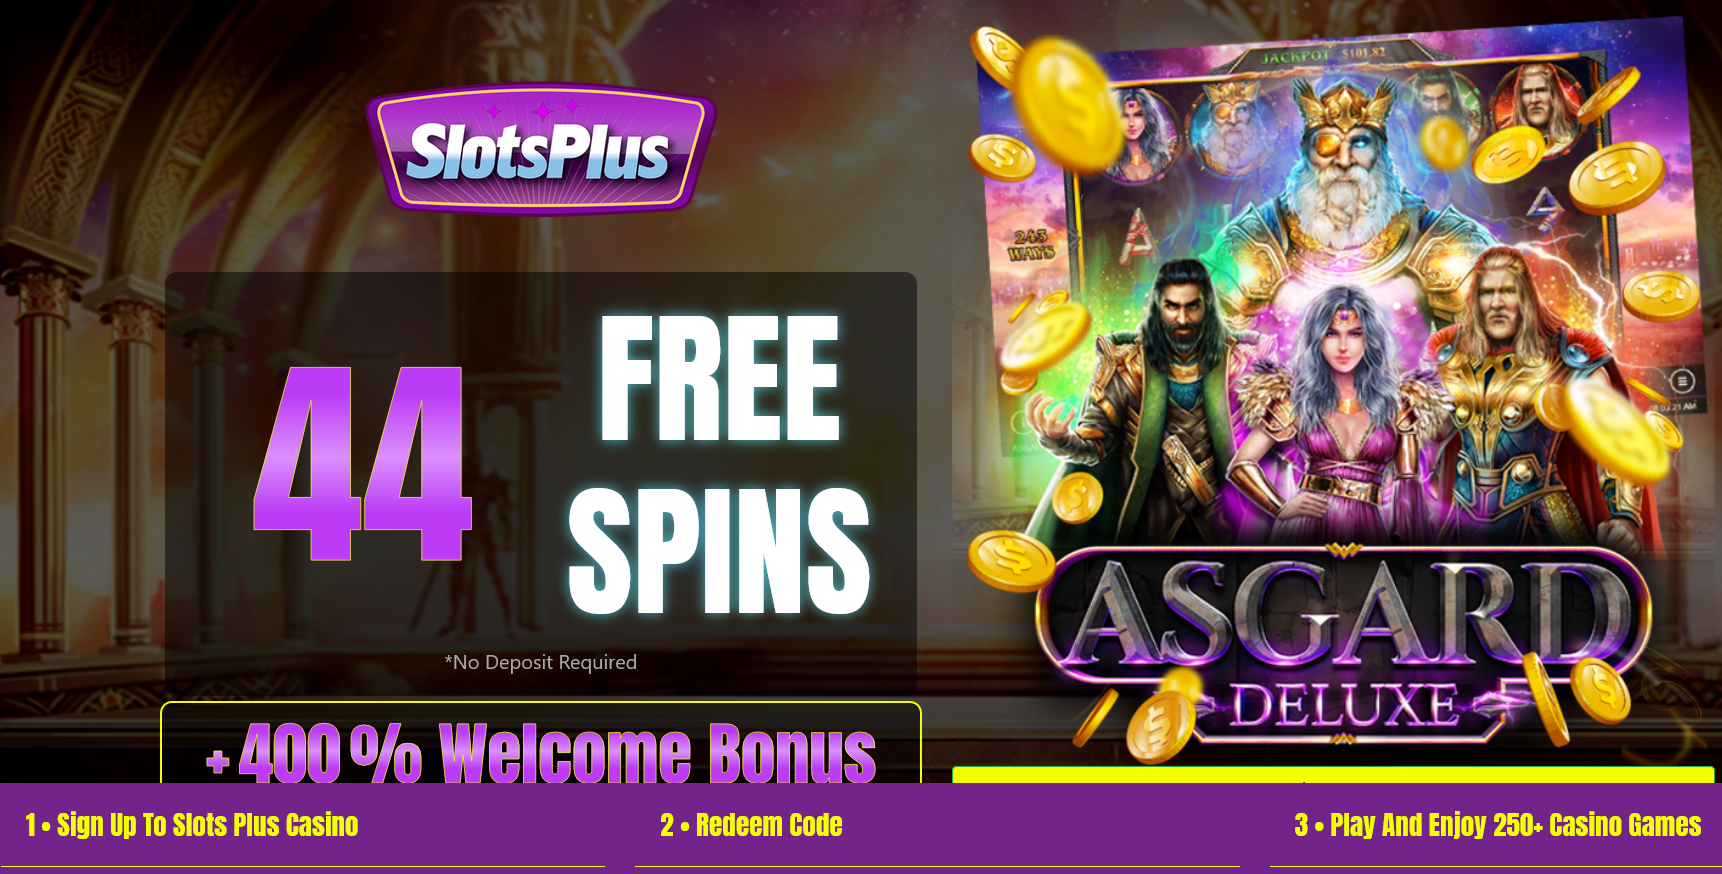 Slots Plus Casino-400%
                                            WELCOME BONUS + 44 FREE
                                            Spins